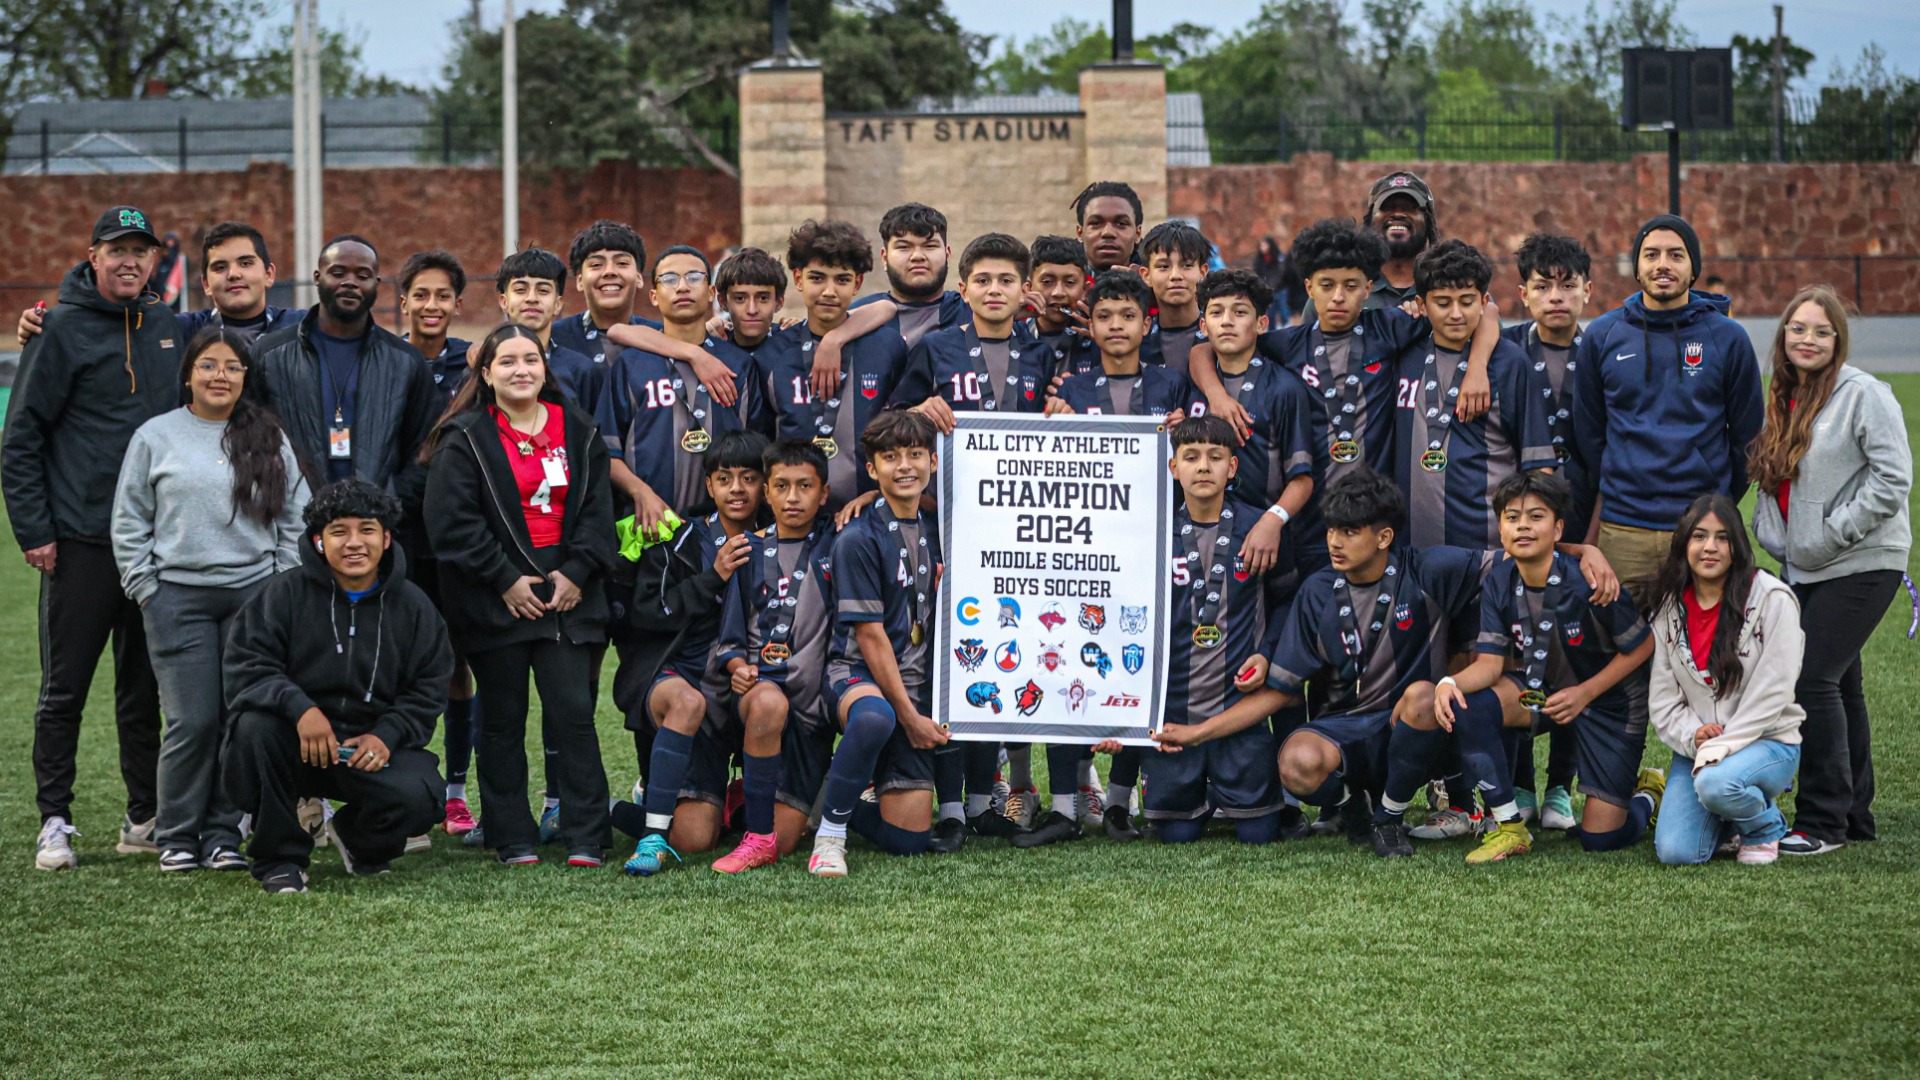 Slide 2 - Taft Middle School Wins 2024 ACAC Boys Soccer Championship